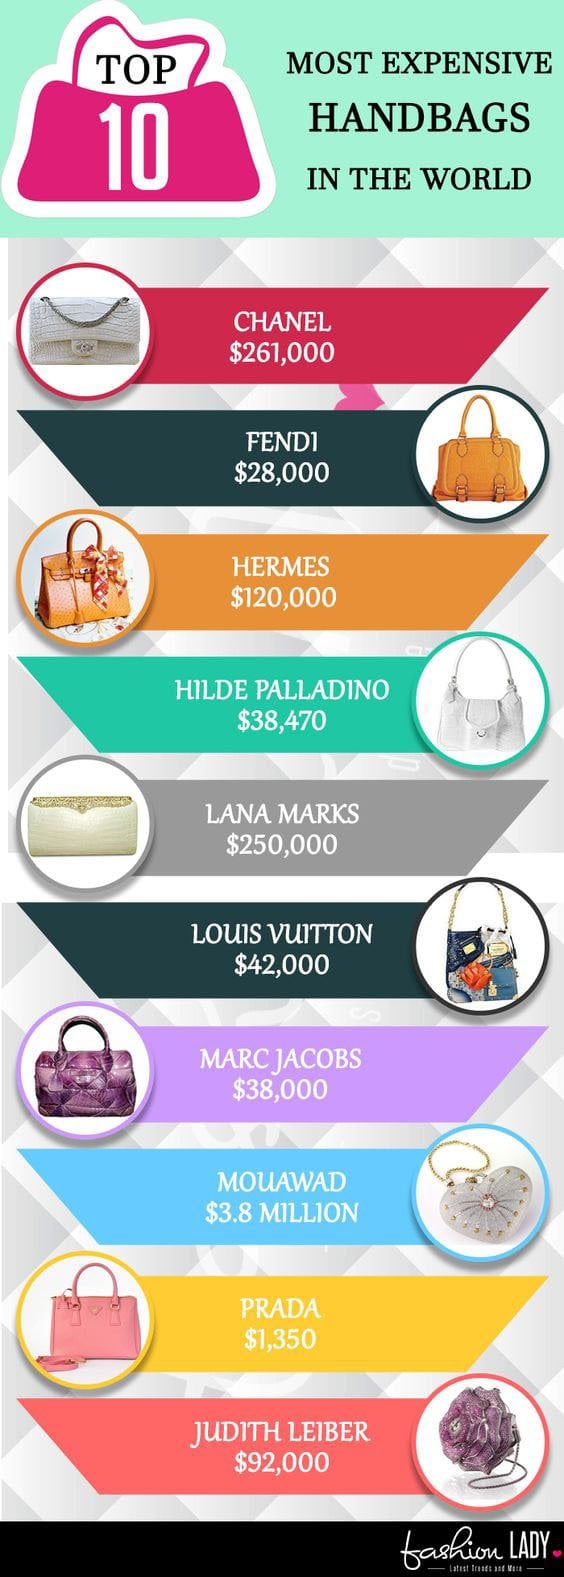 most expensive handbag brands list